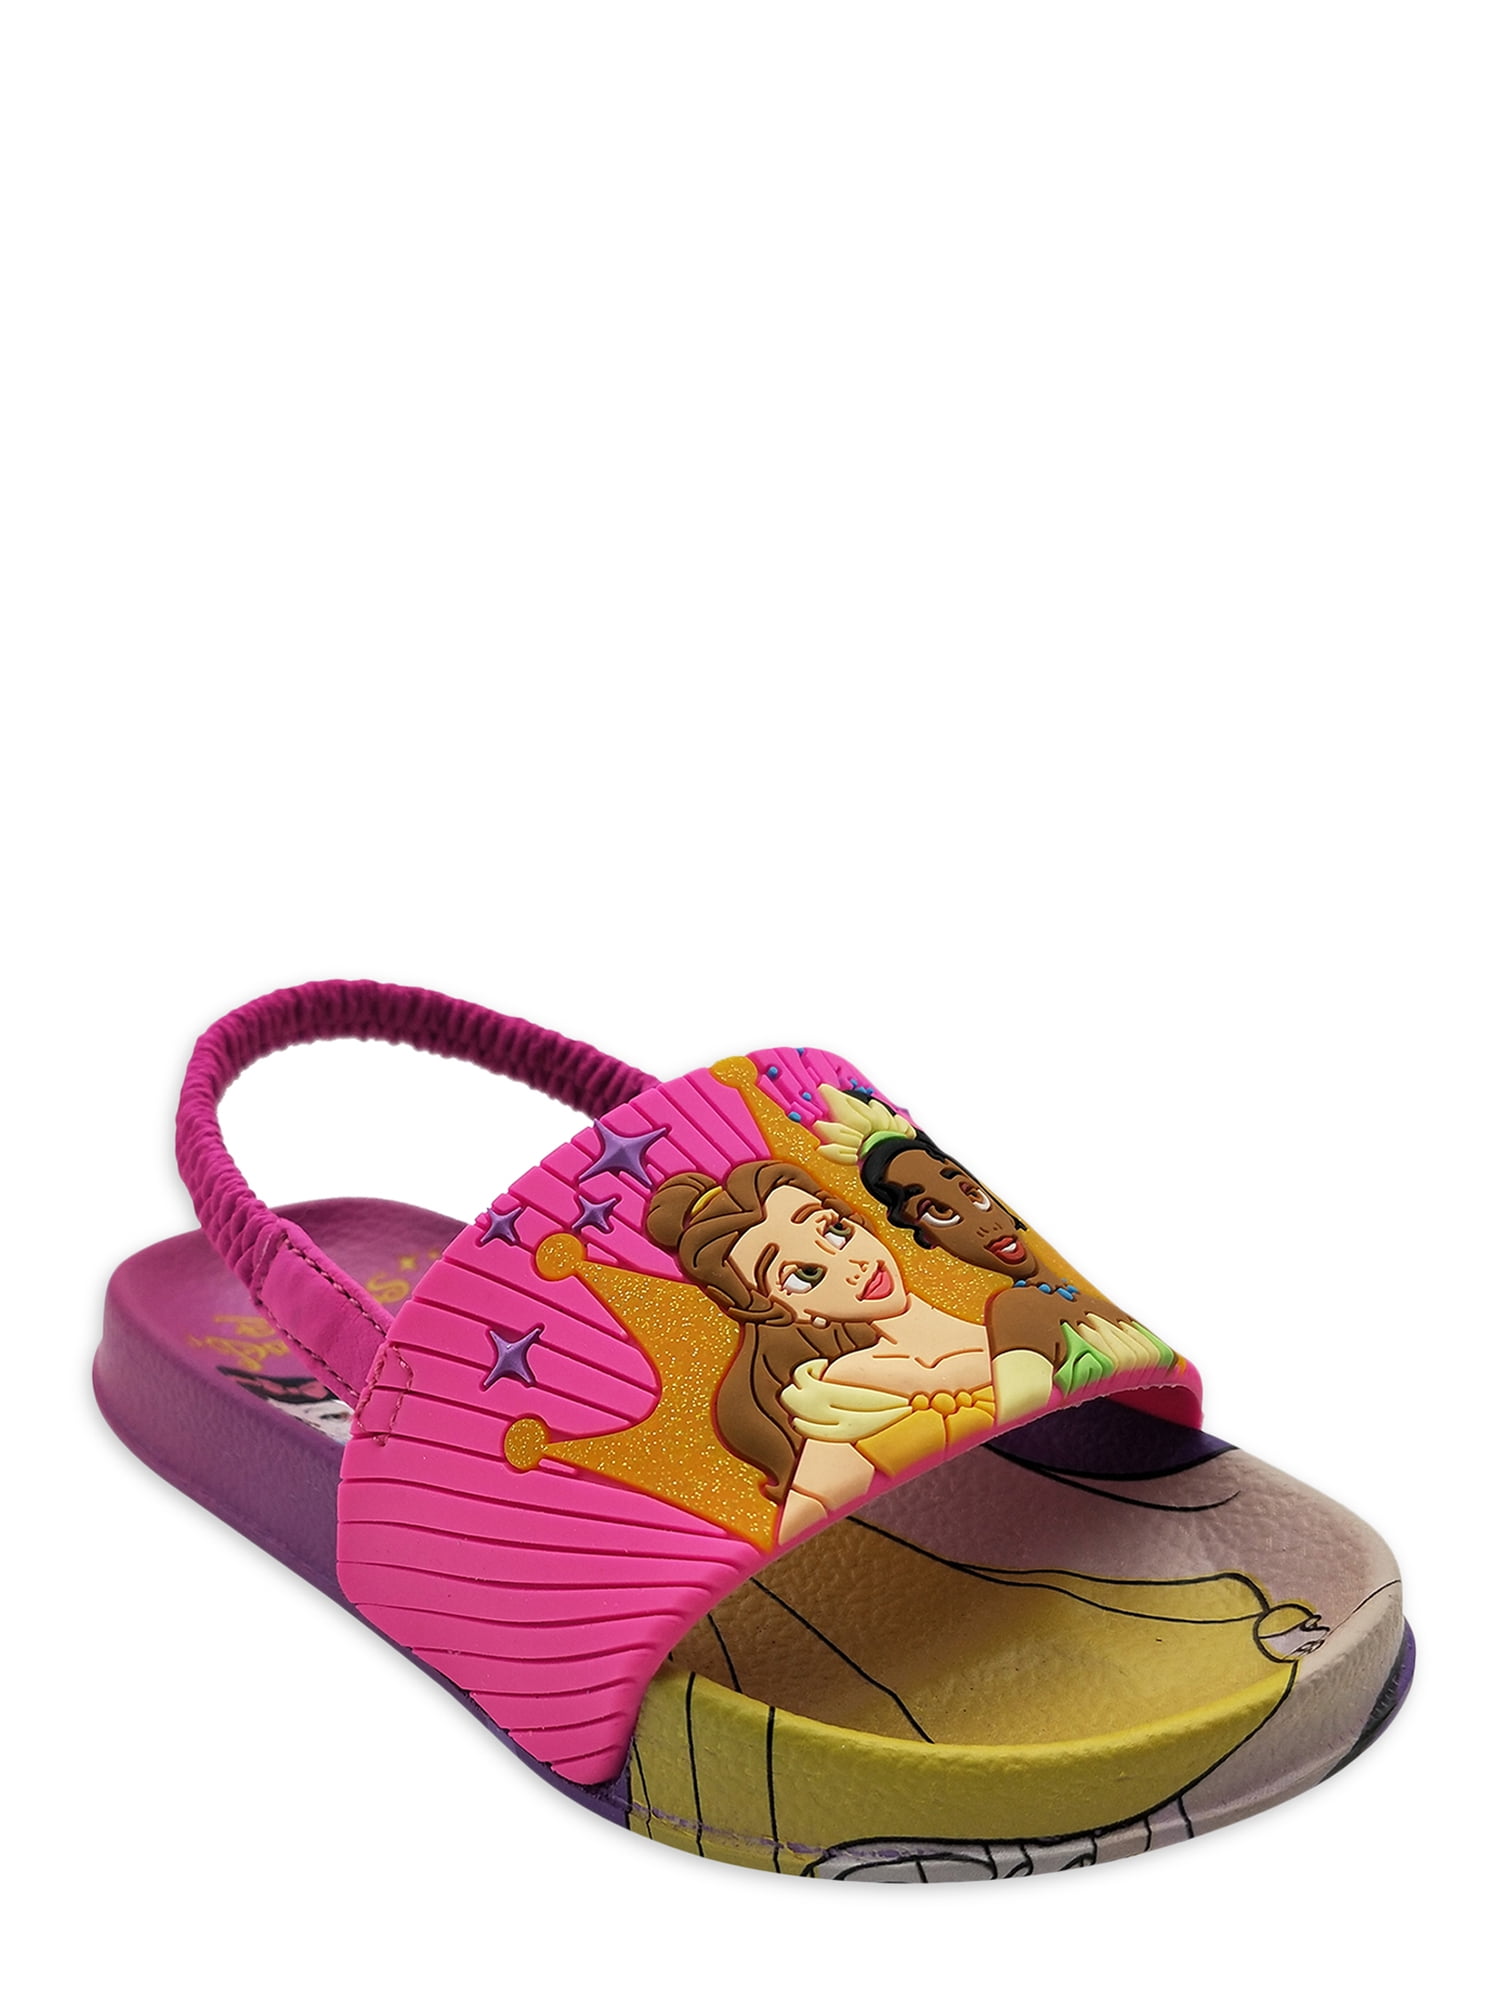 NEW Disney Toddler Girls' Princess Sport Sandal 6 7 8 9 10 11 12 size 